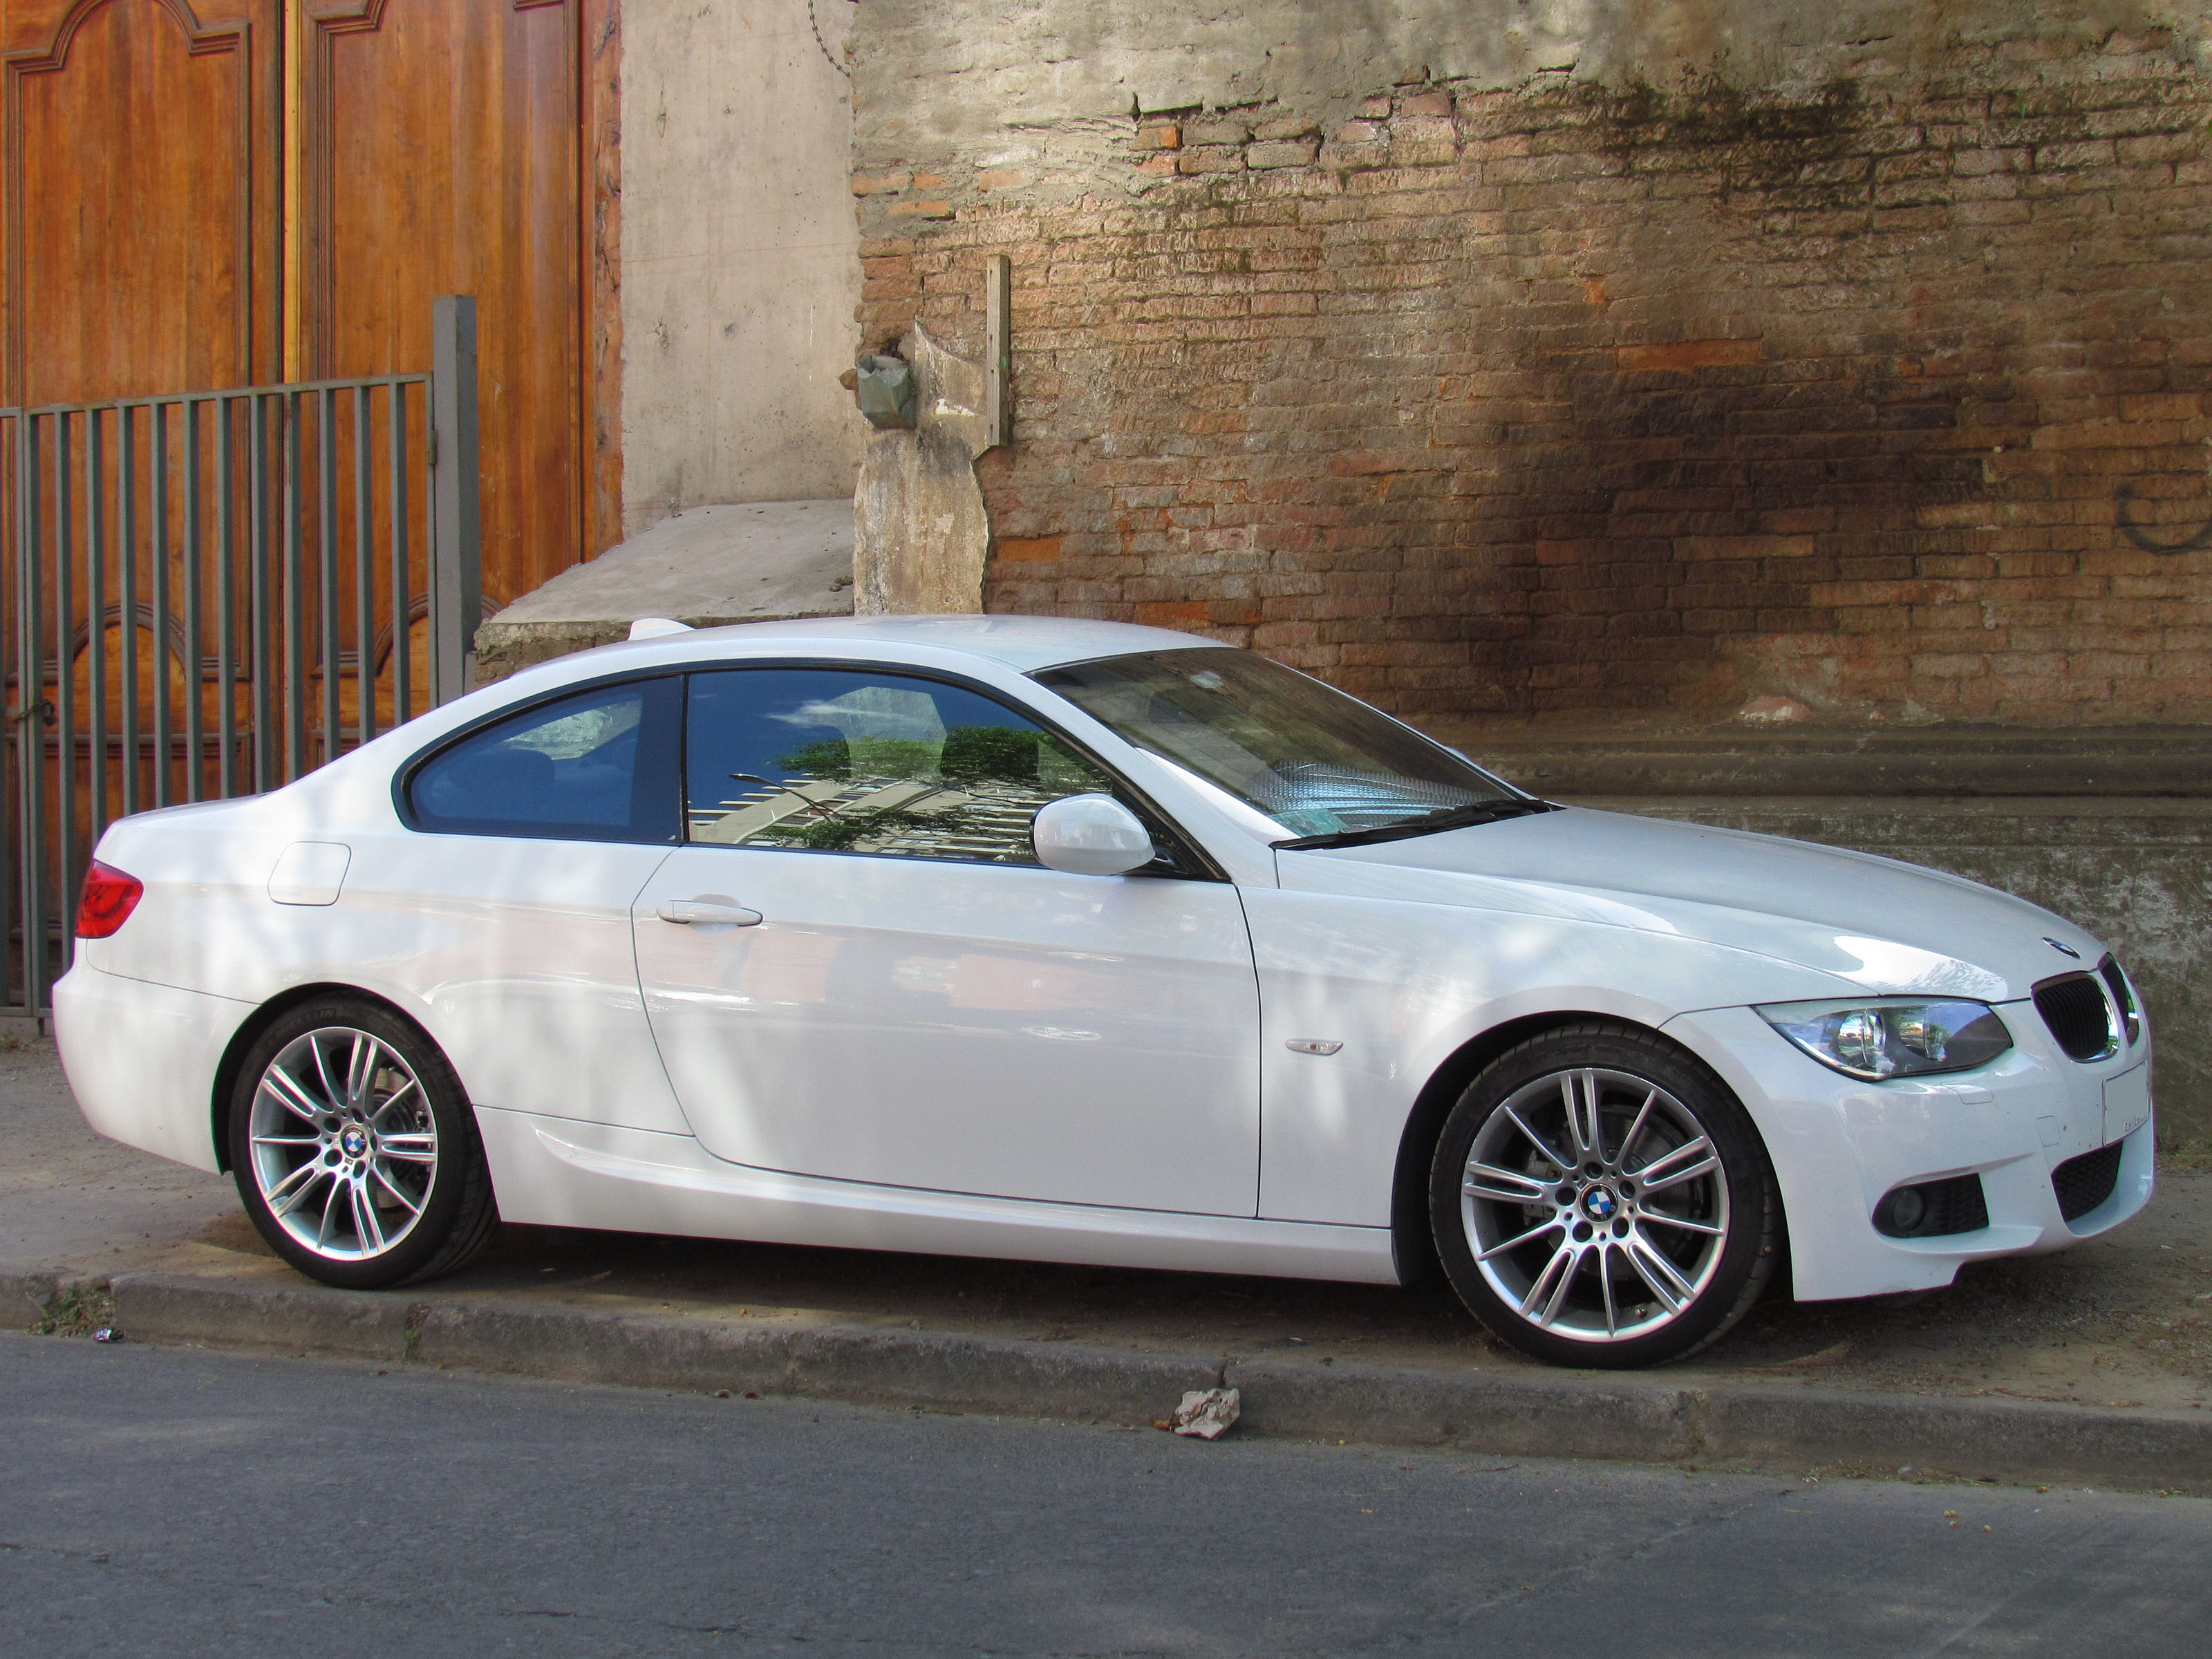 File:BMW 320i Coupe 2013 (11376505286).jpg - Wikimedia Commons